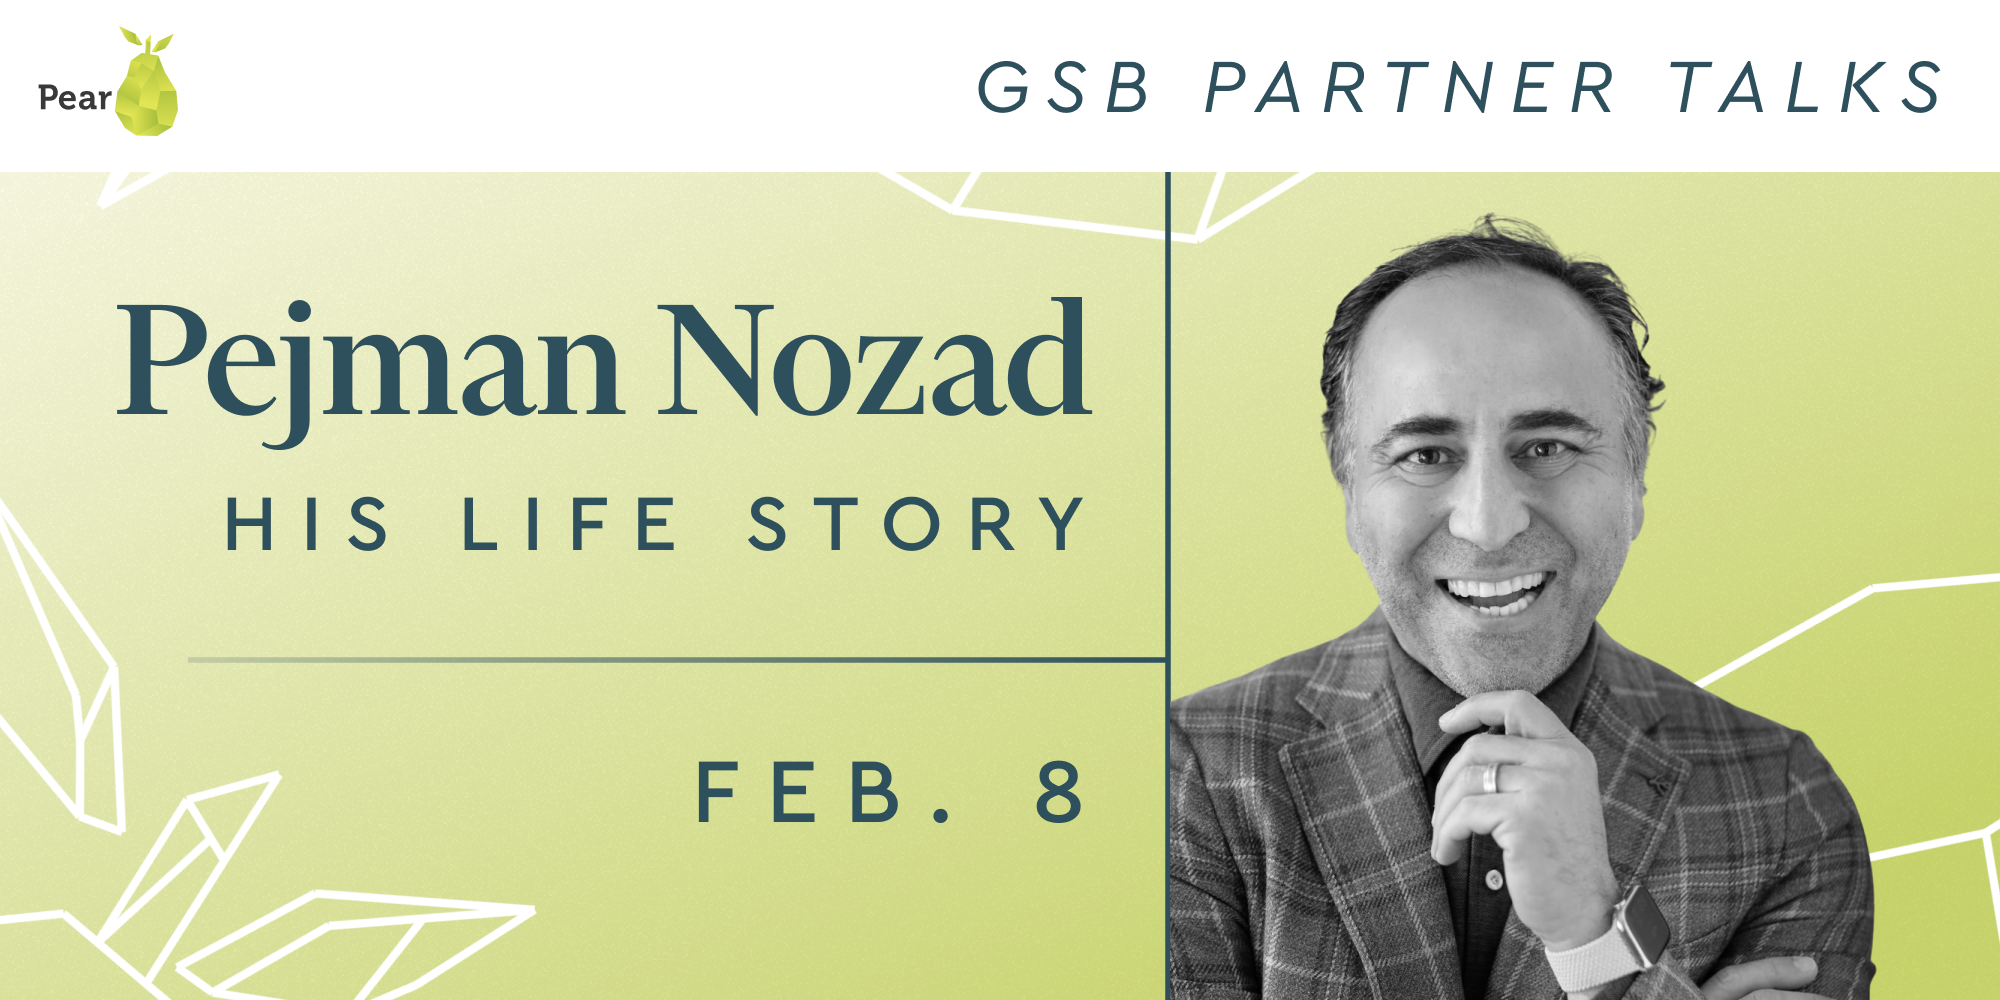 event GSB Partner Talks: Pear VC’s Pejman Nozad’s Life Story